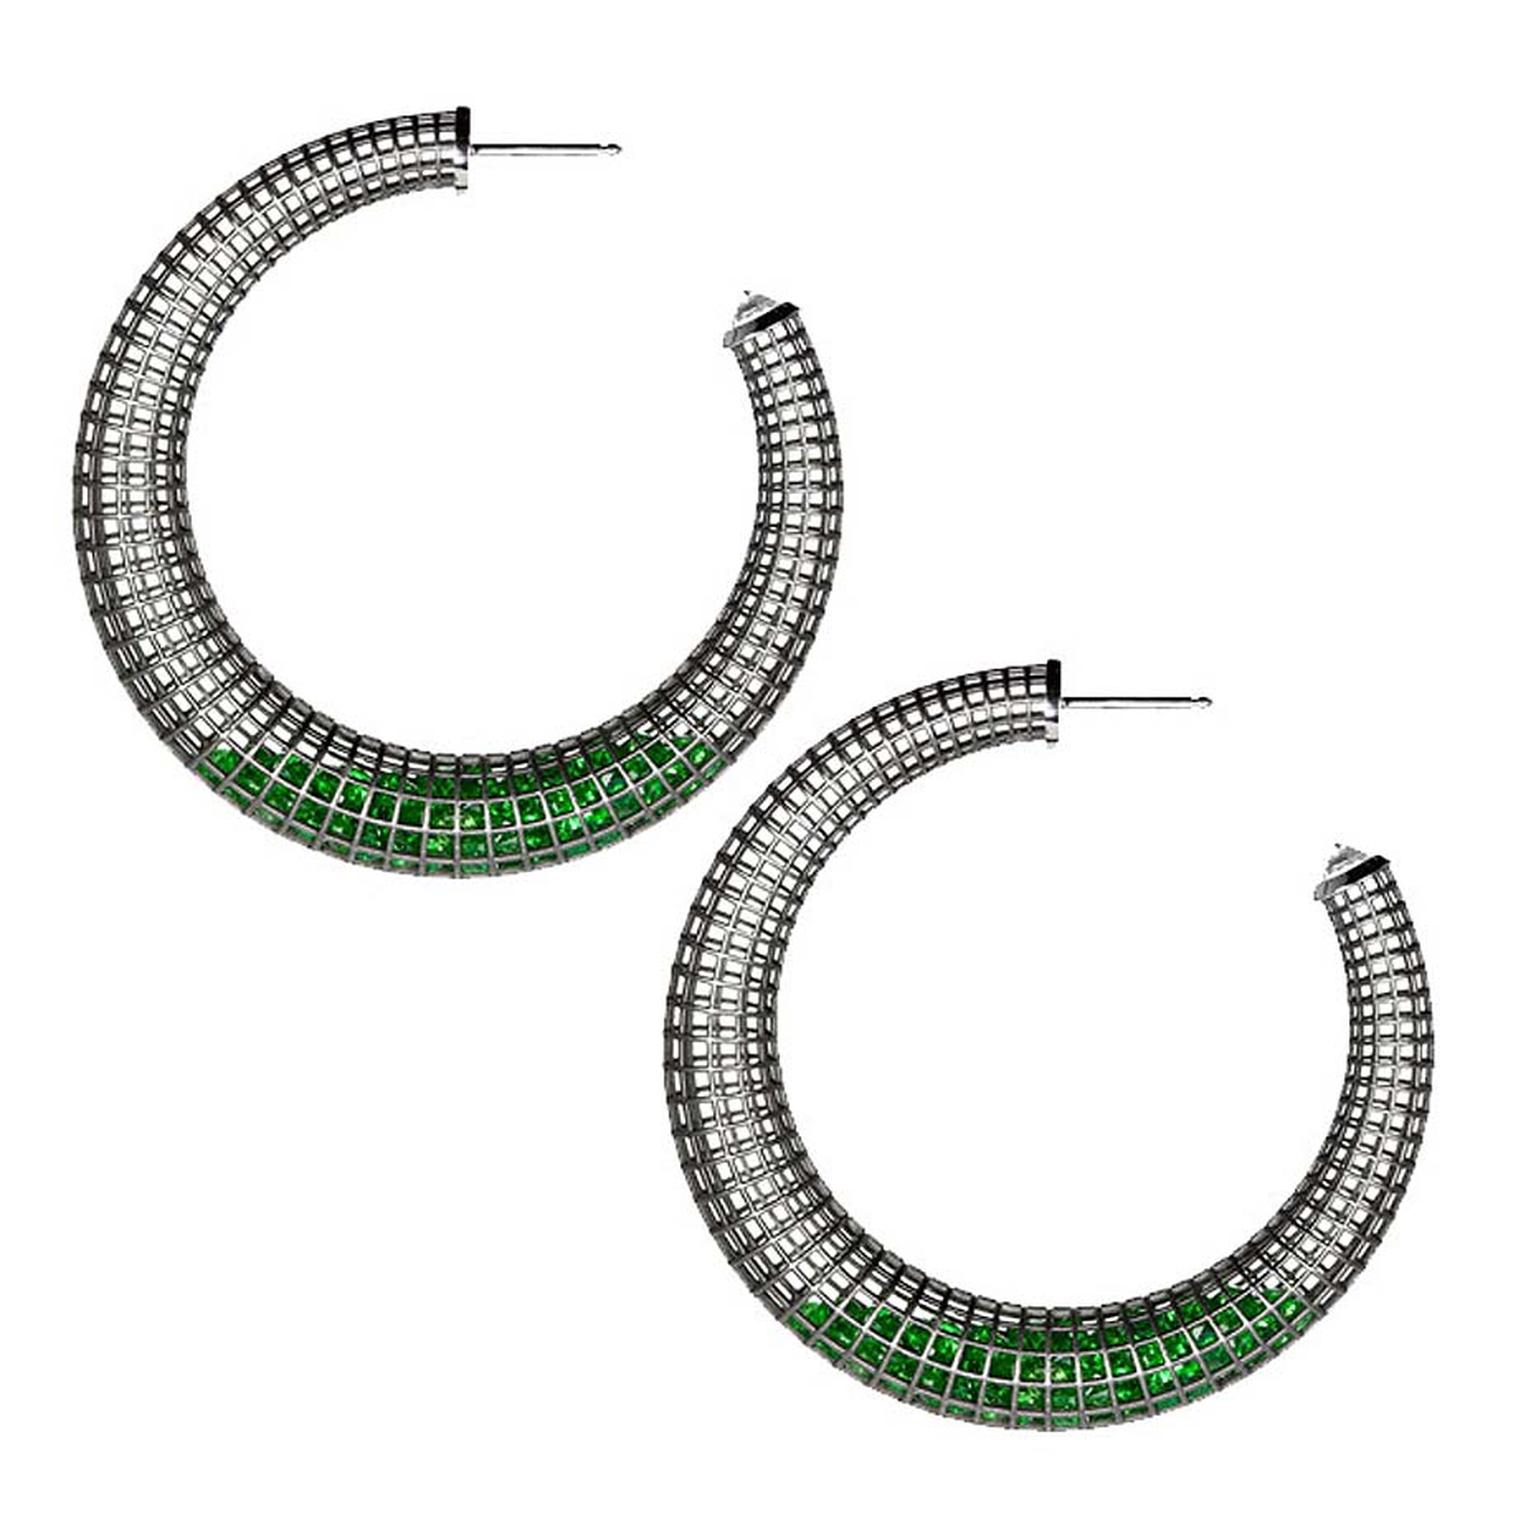 Roule & Co Shaker Crescent hoop earrings in blackened white gold, with floating green tsavorites. $15,500.